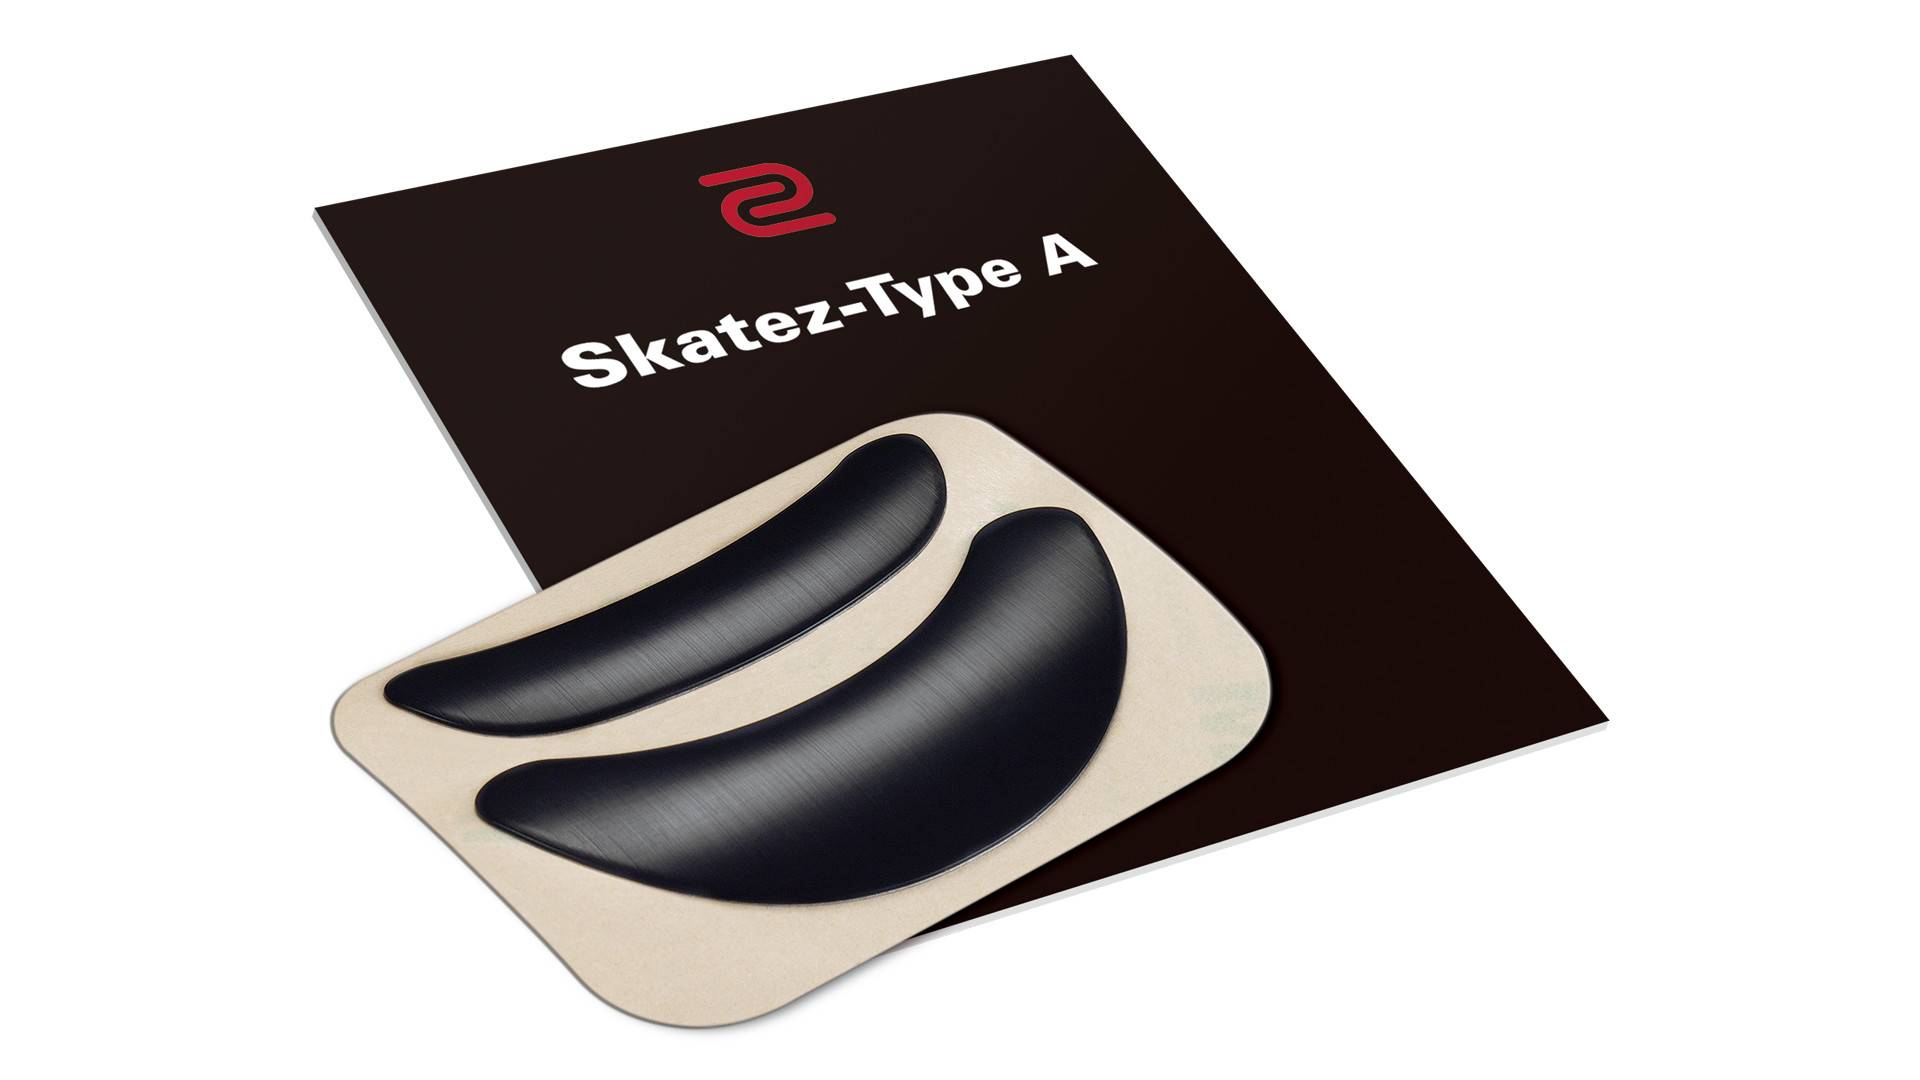 BENQ Zowie Тефлоновые накладки для мышей Skatez-Type A, для серии FK, ZA11, ZA12 и серии S, толщина 0,4 мм.